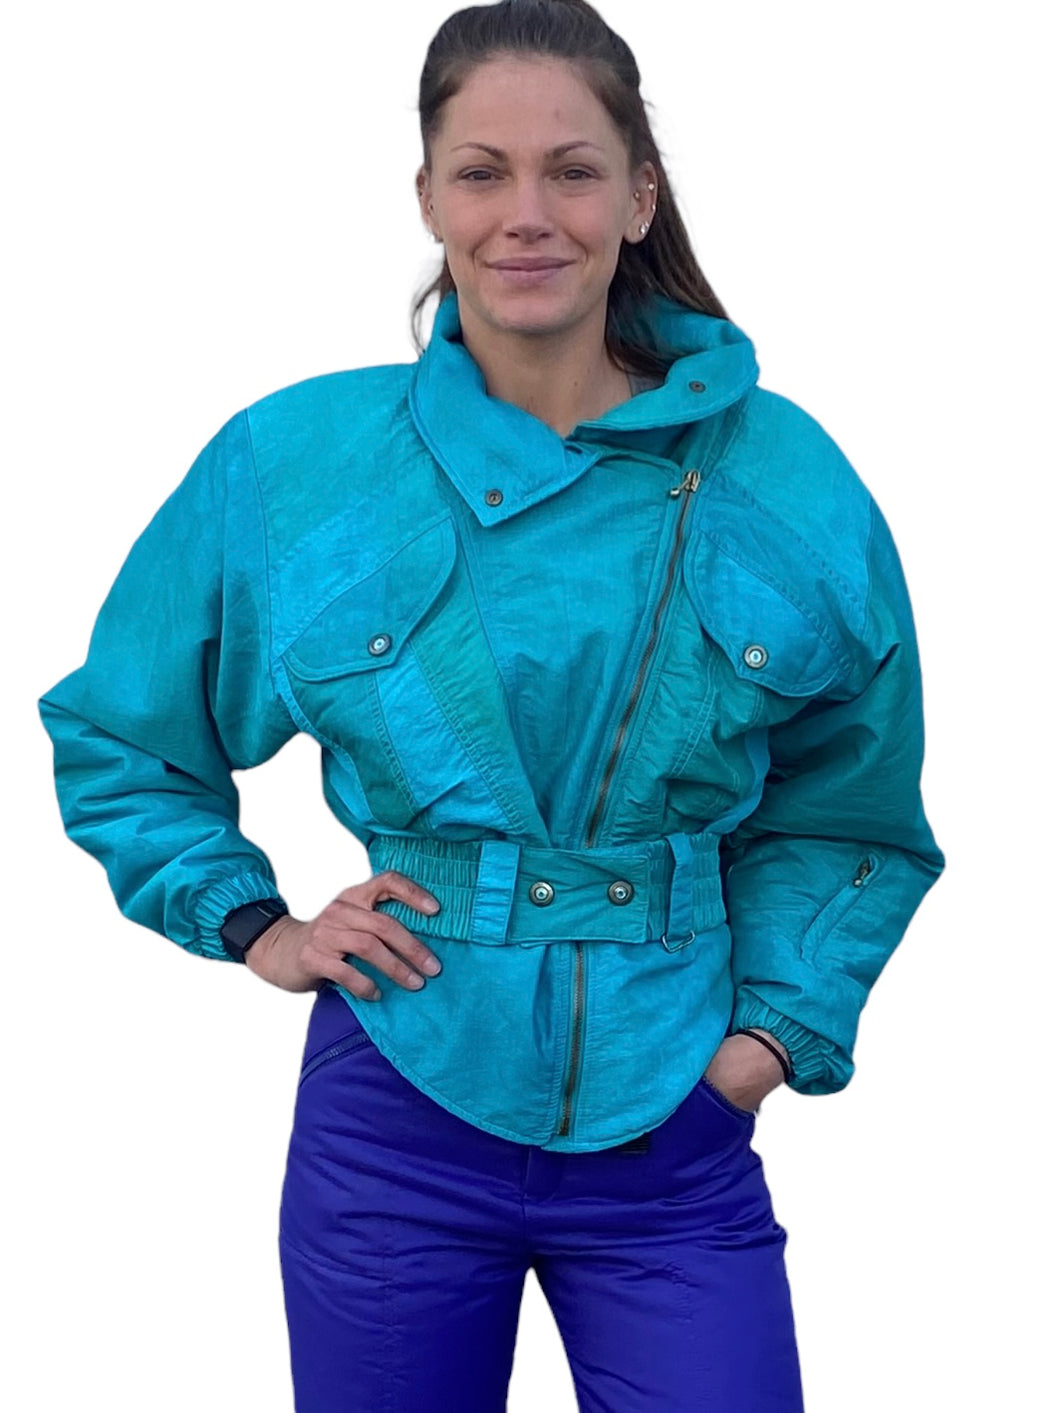 Vintage 1980s Turquoise Nils Ski Jacket - Size 4 / Small